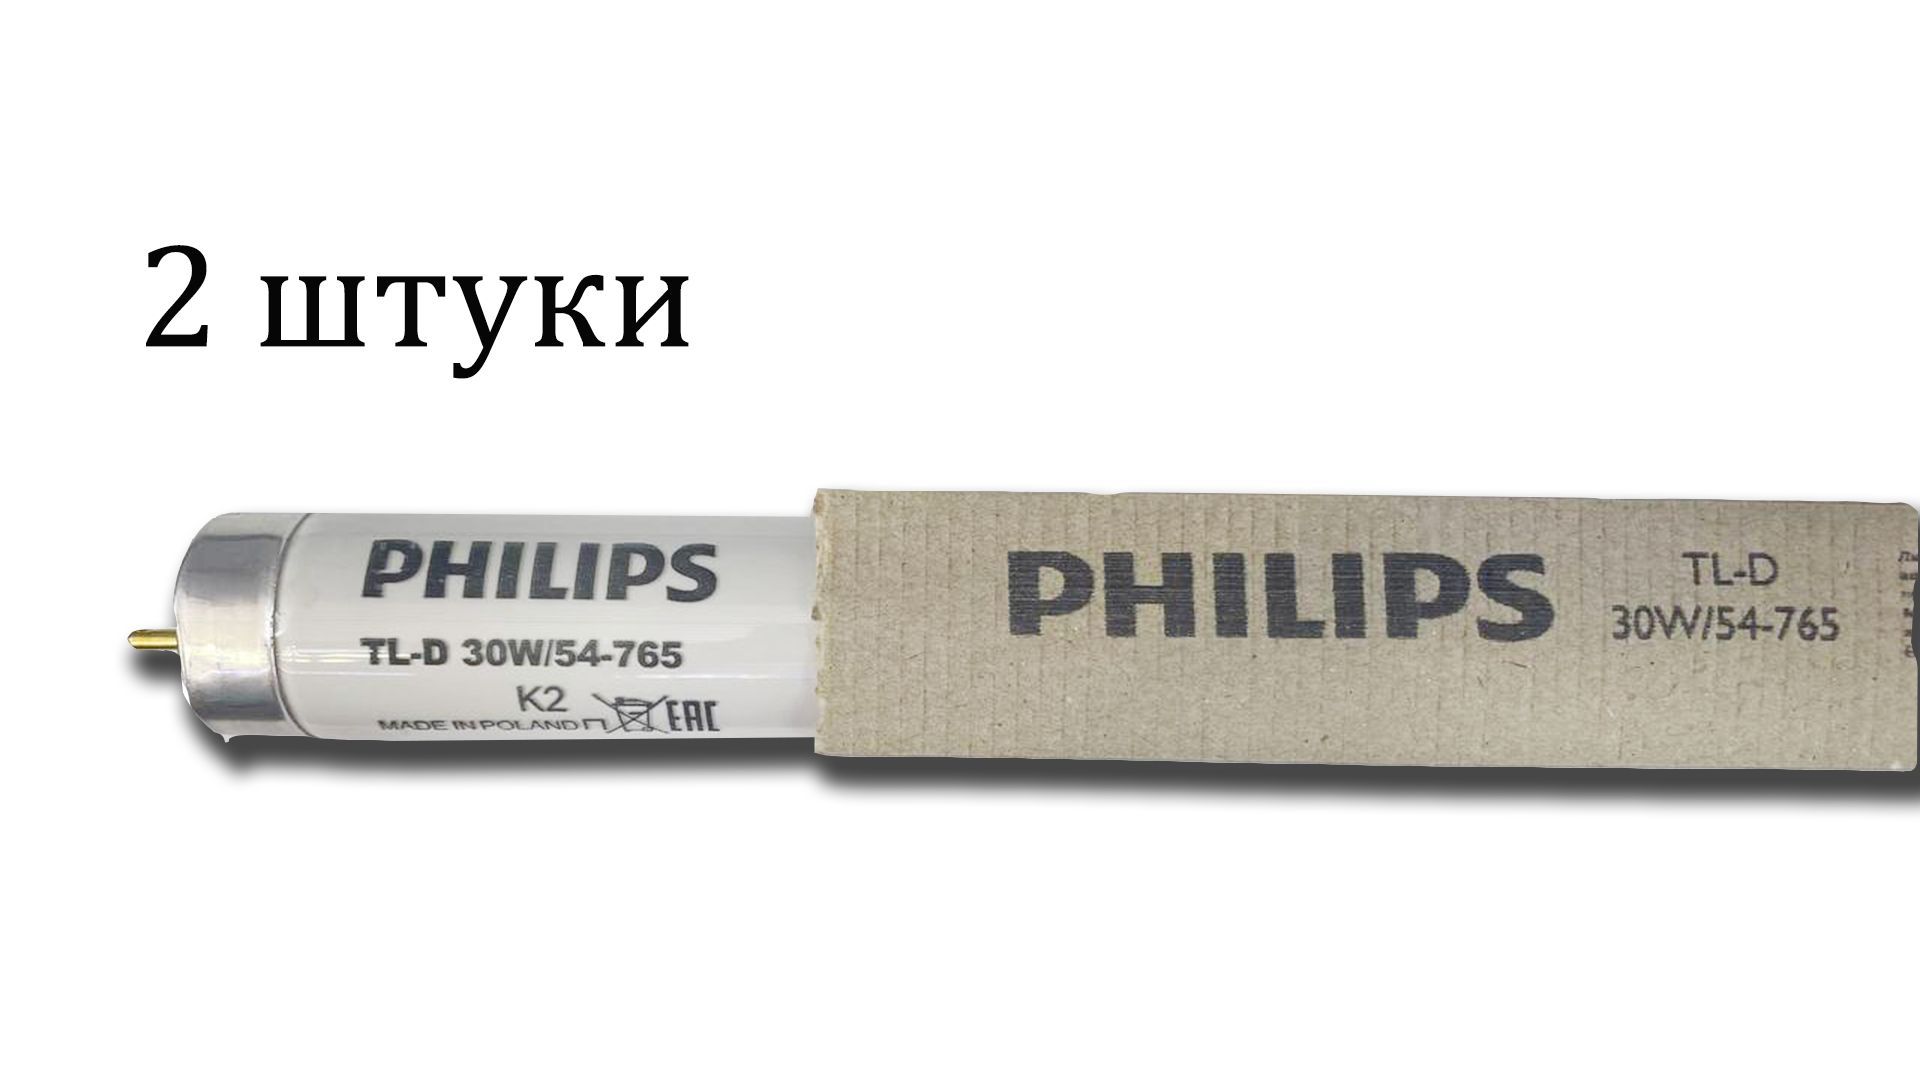 Philips tl d 54 765